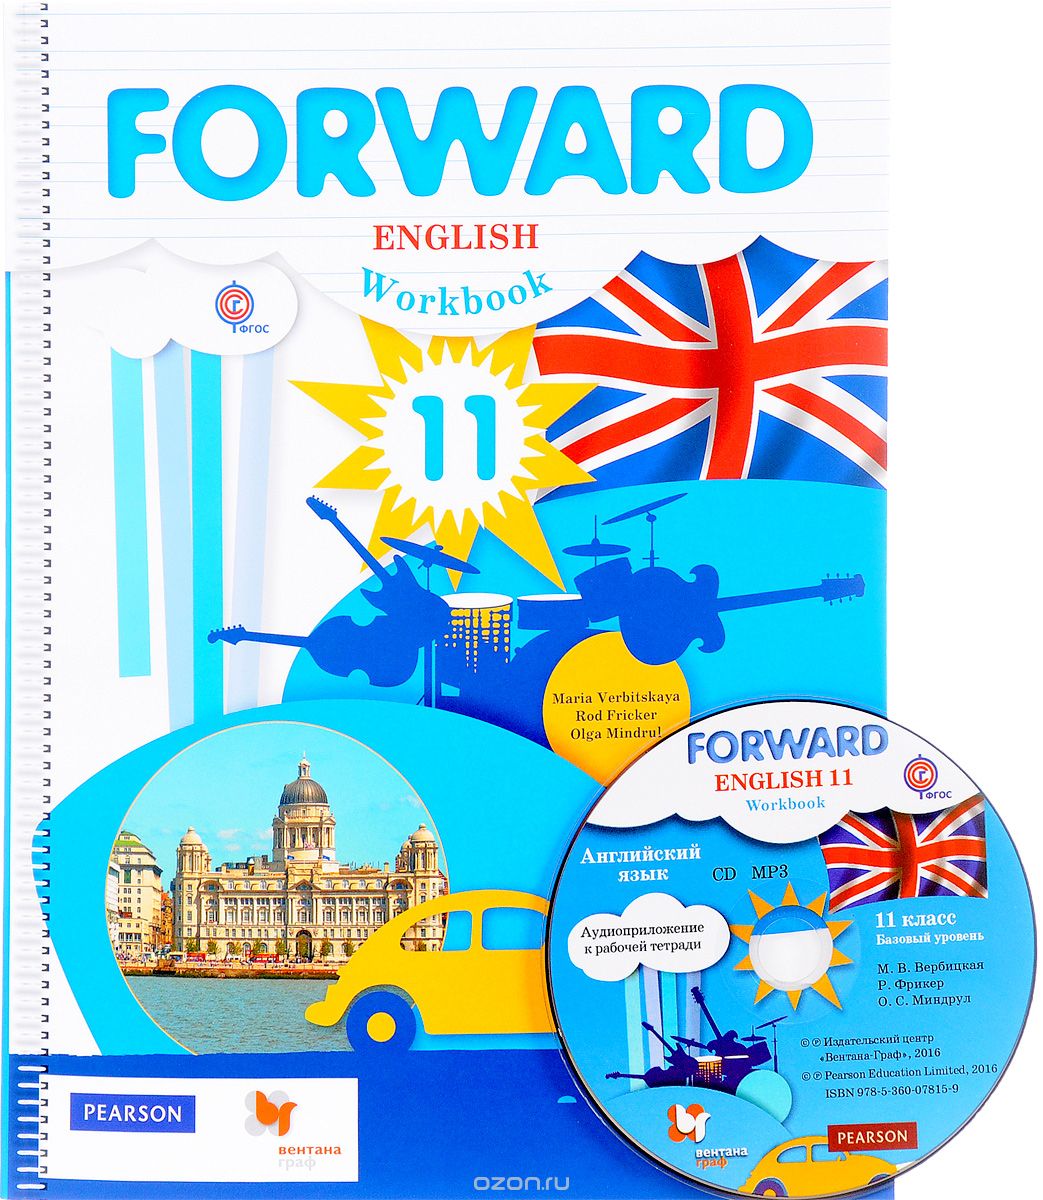 Forward English 11: Workbook / Английский язык. 11 класс. Базовый уровень. Рабочая тетрадь (+ CD), Maria Verbitskaya, Rod Fricker, Olga Mindrul